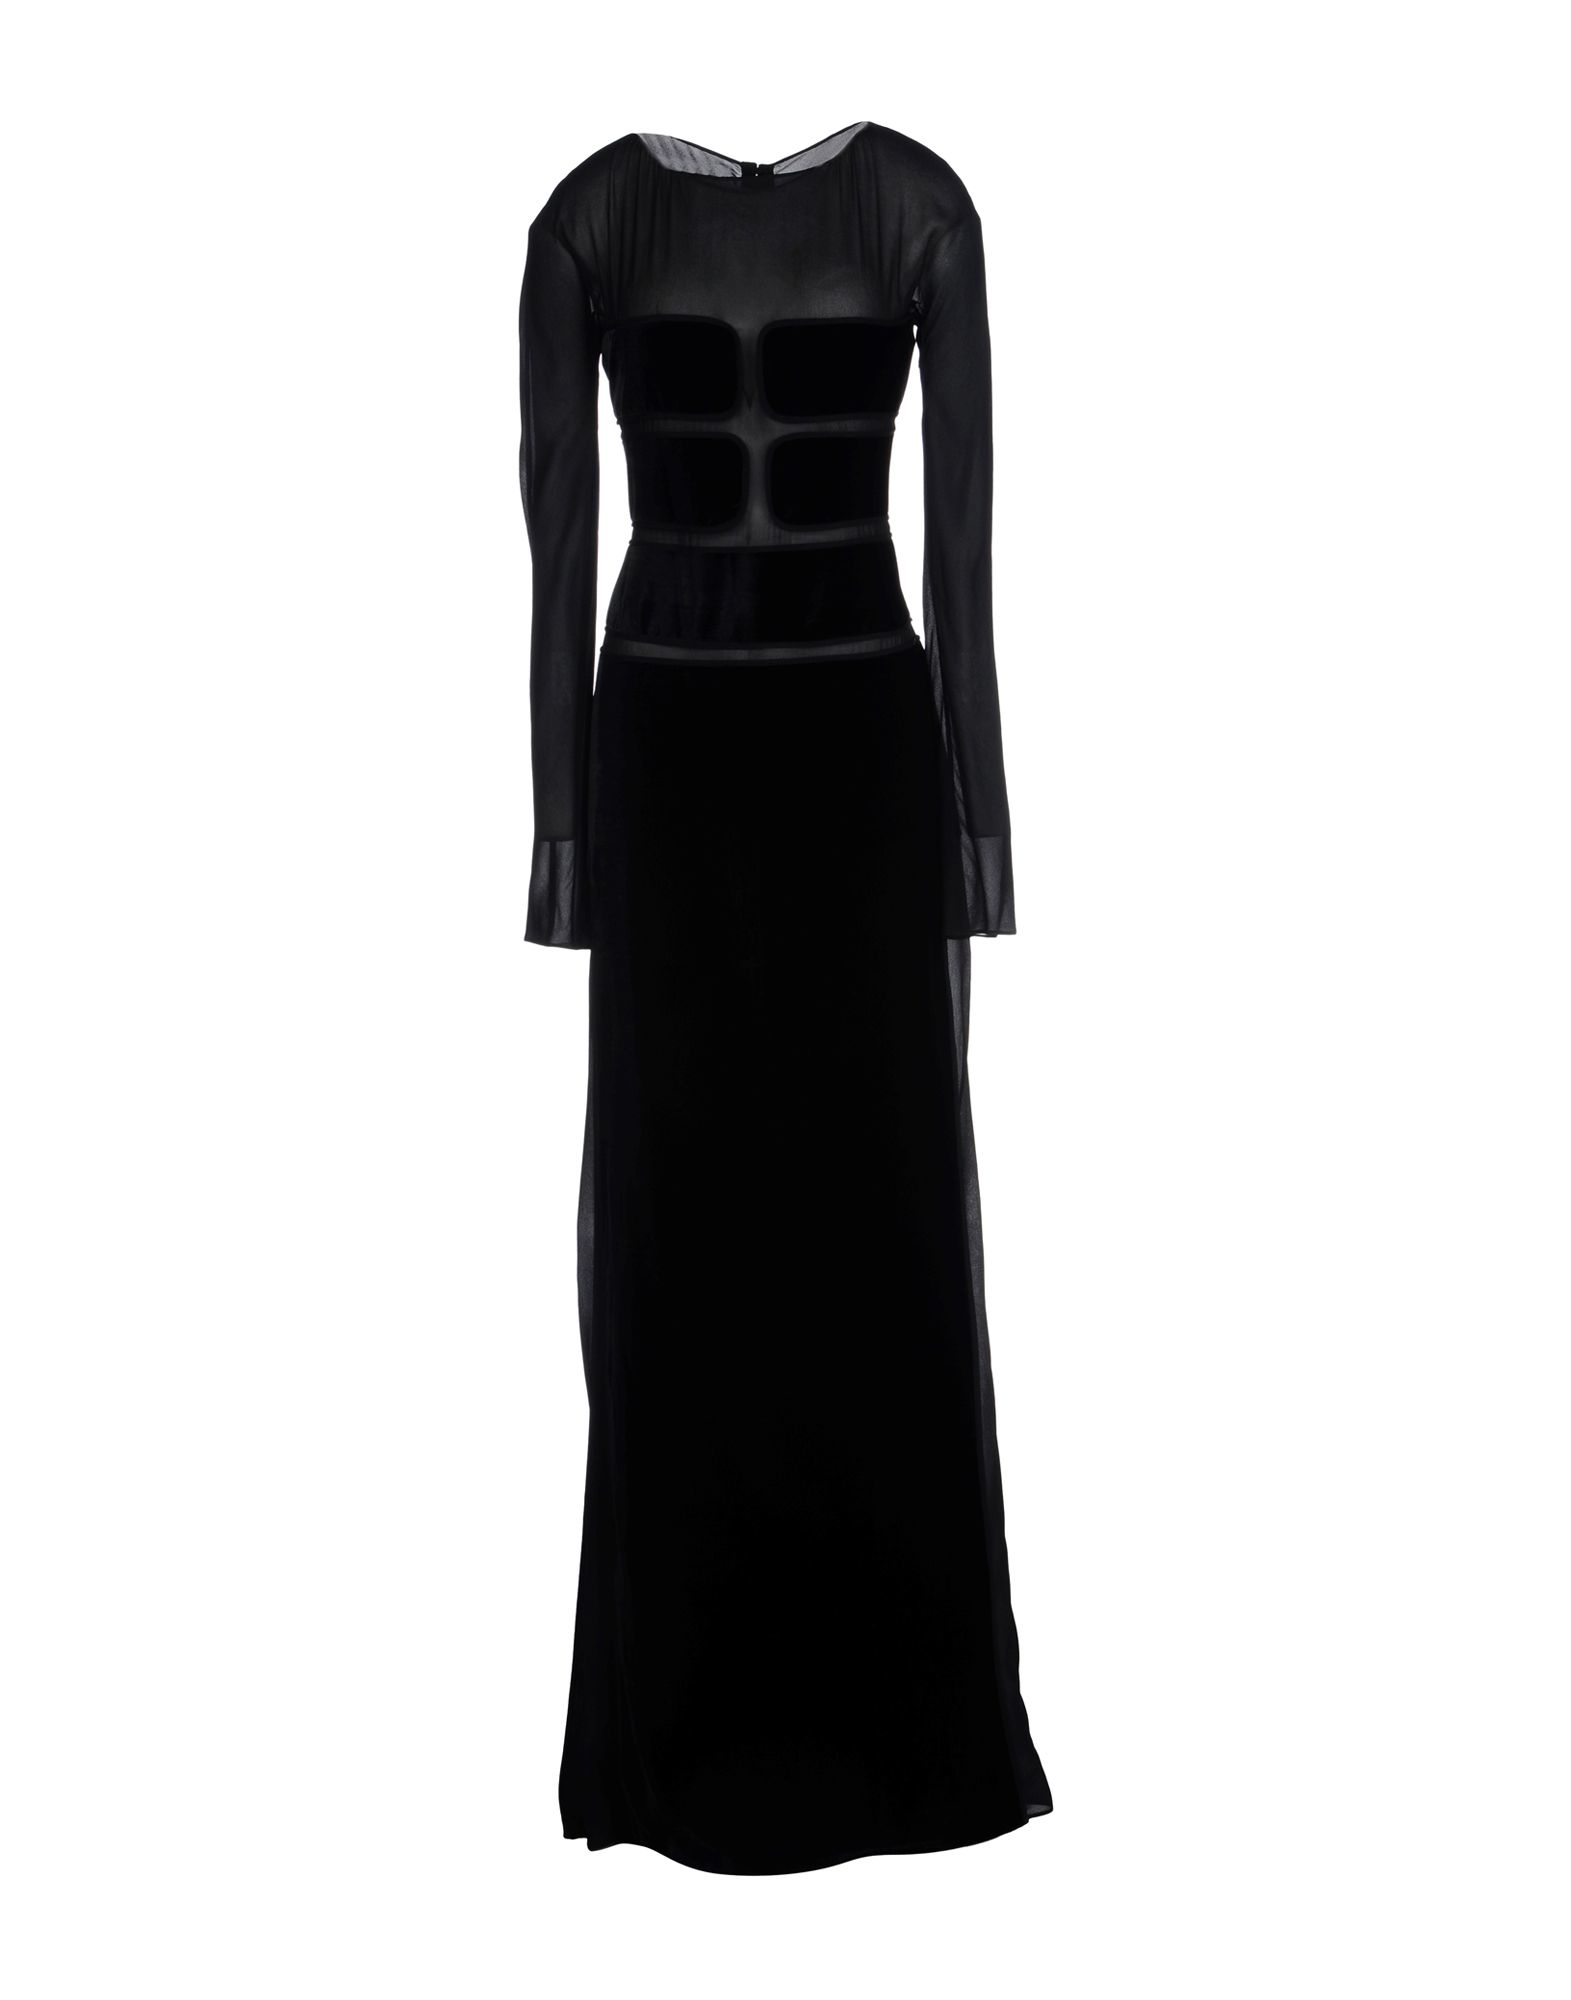 Tom ford Long Dress in Black | Lyst